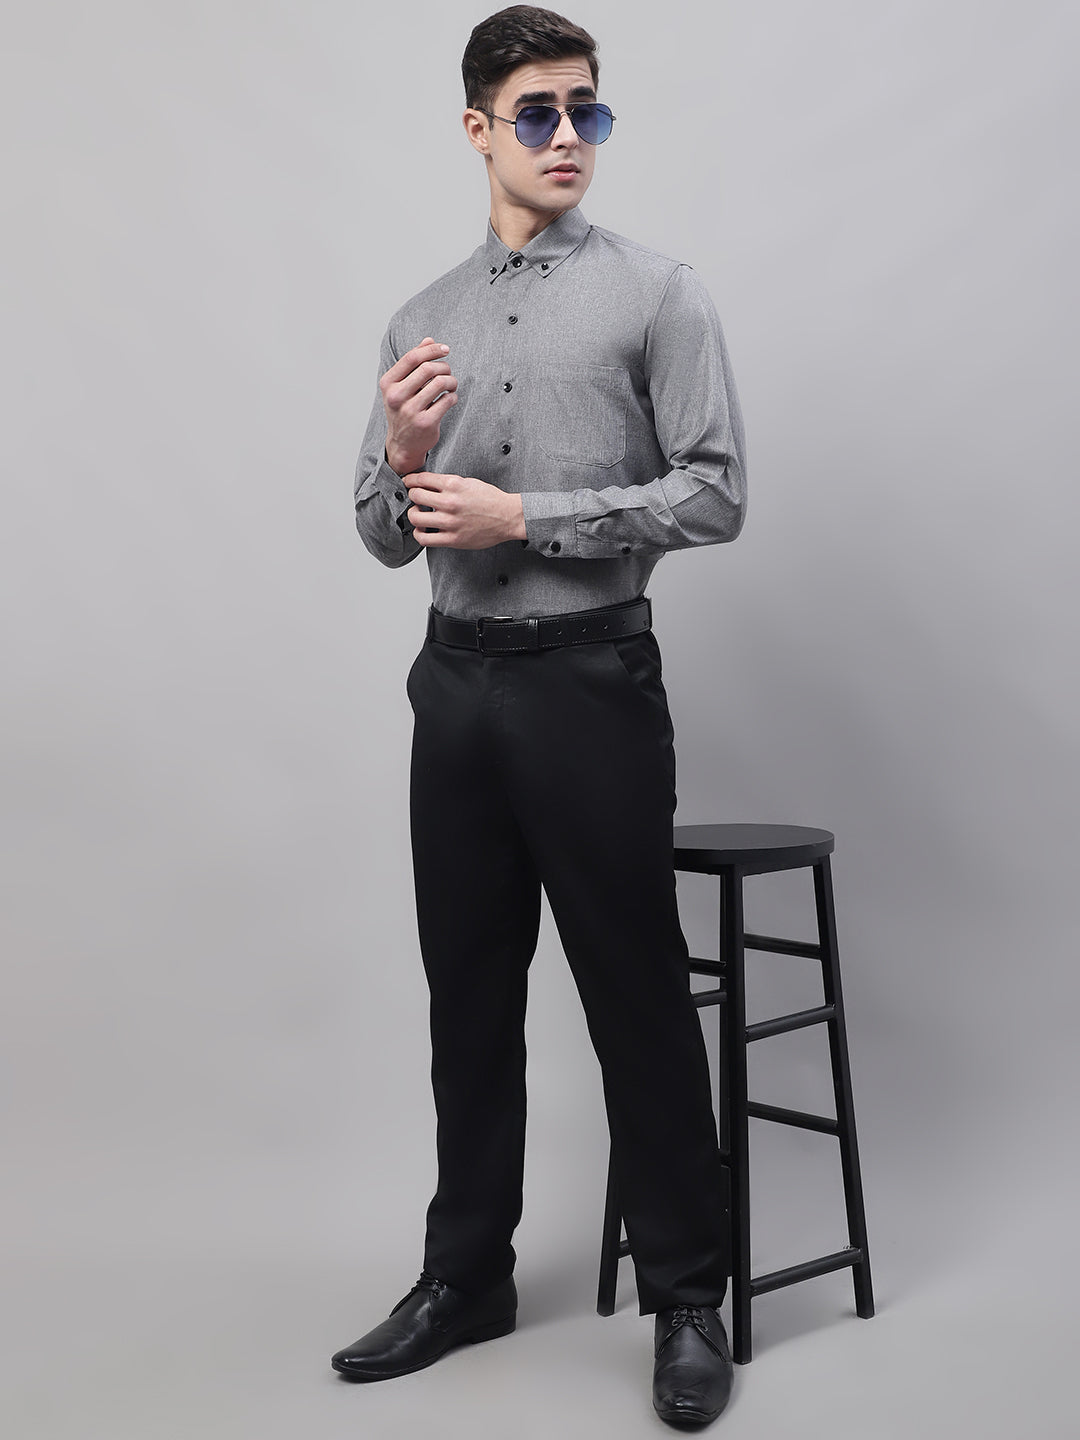 Men's Dark-Grey Cotton Solid Formal Shirt